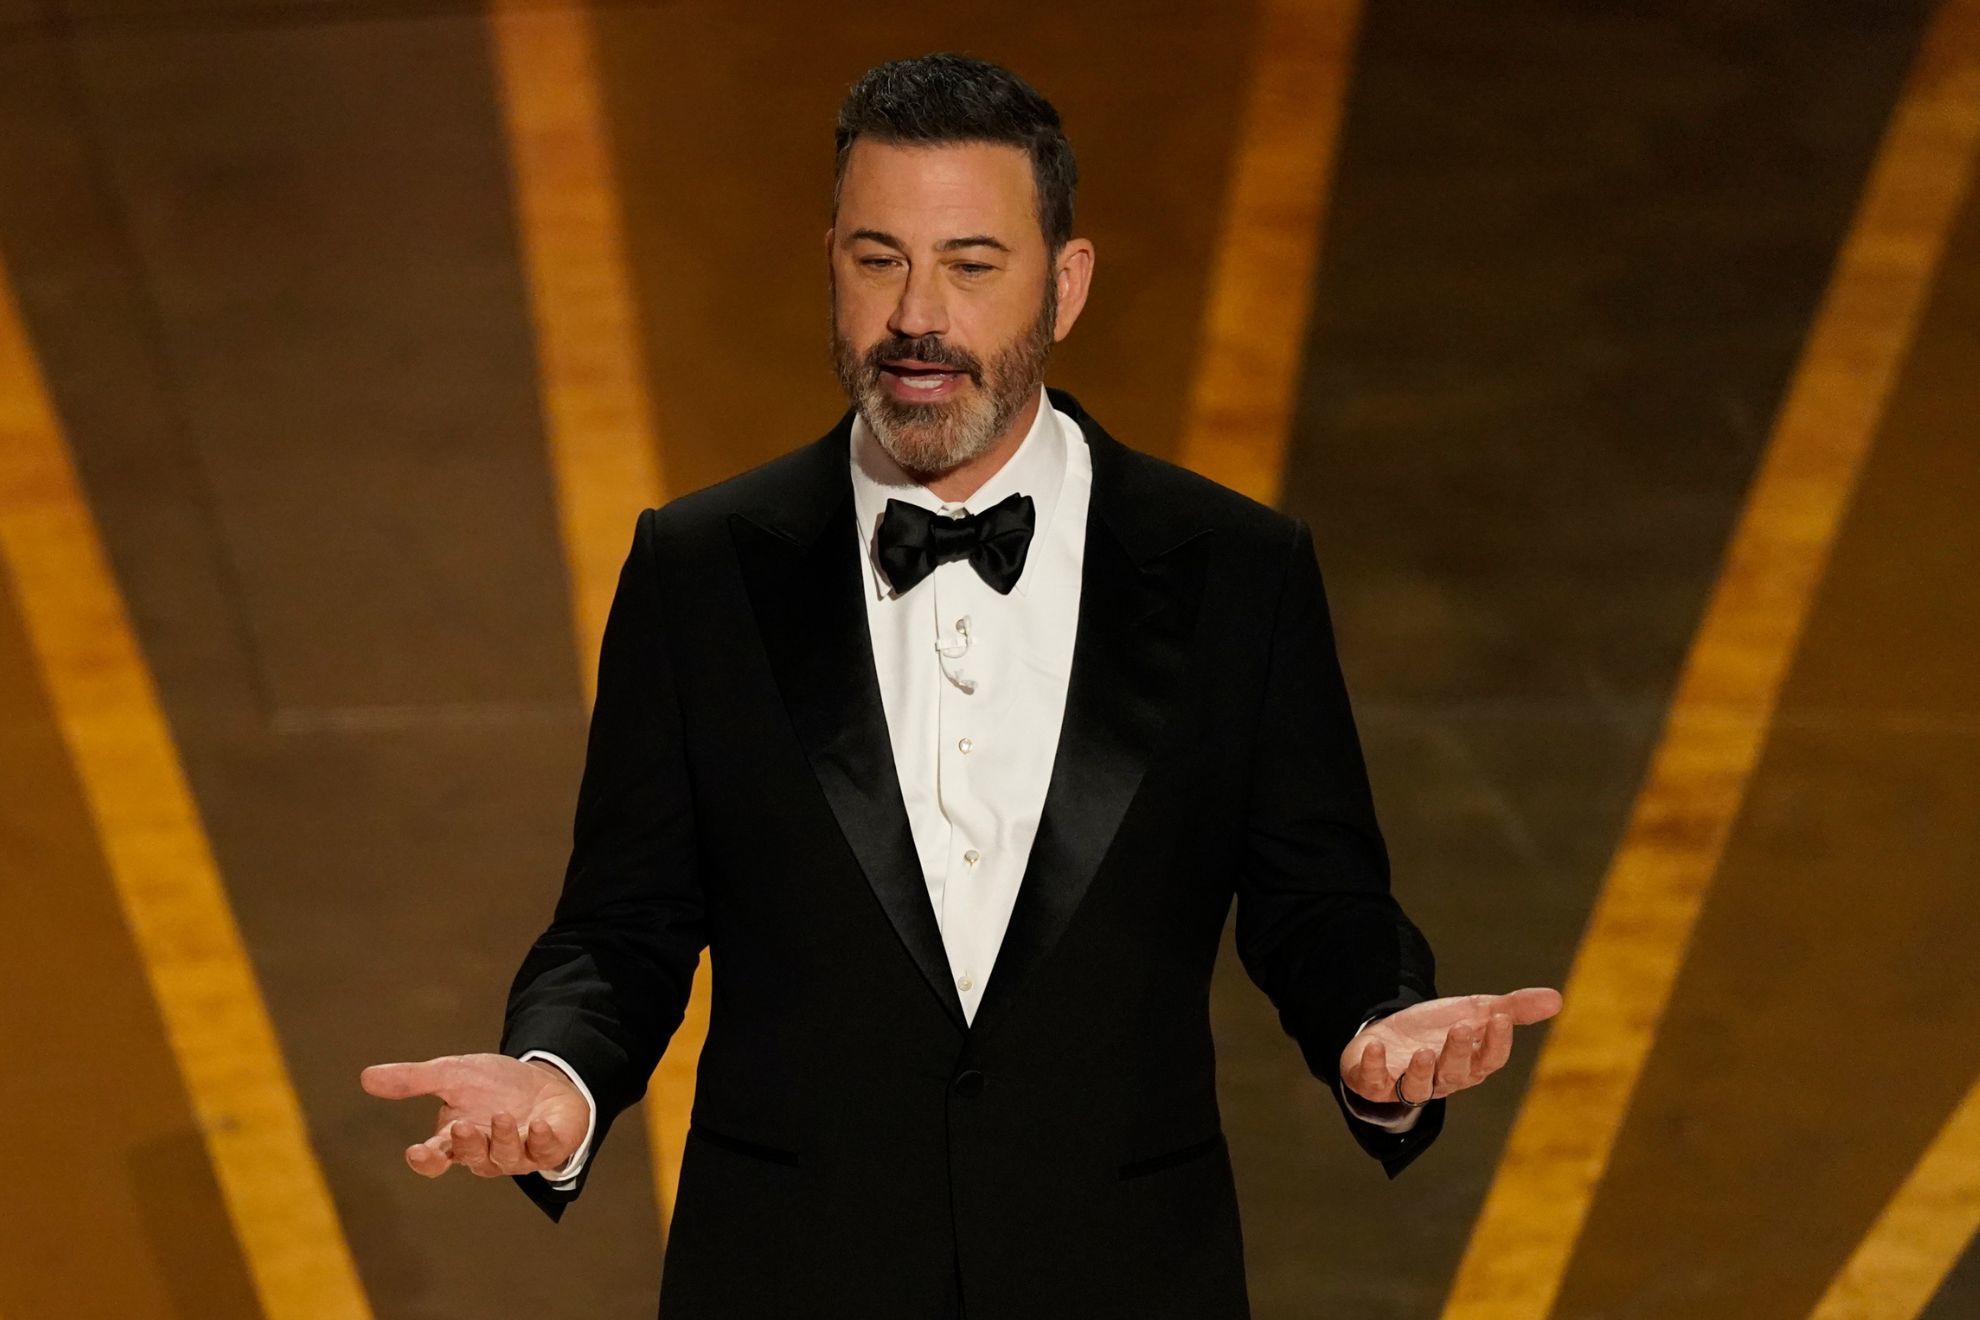 Oscars host Jimmy Kimmel makes fun of last year's slap